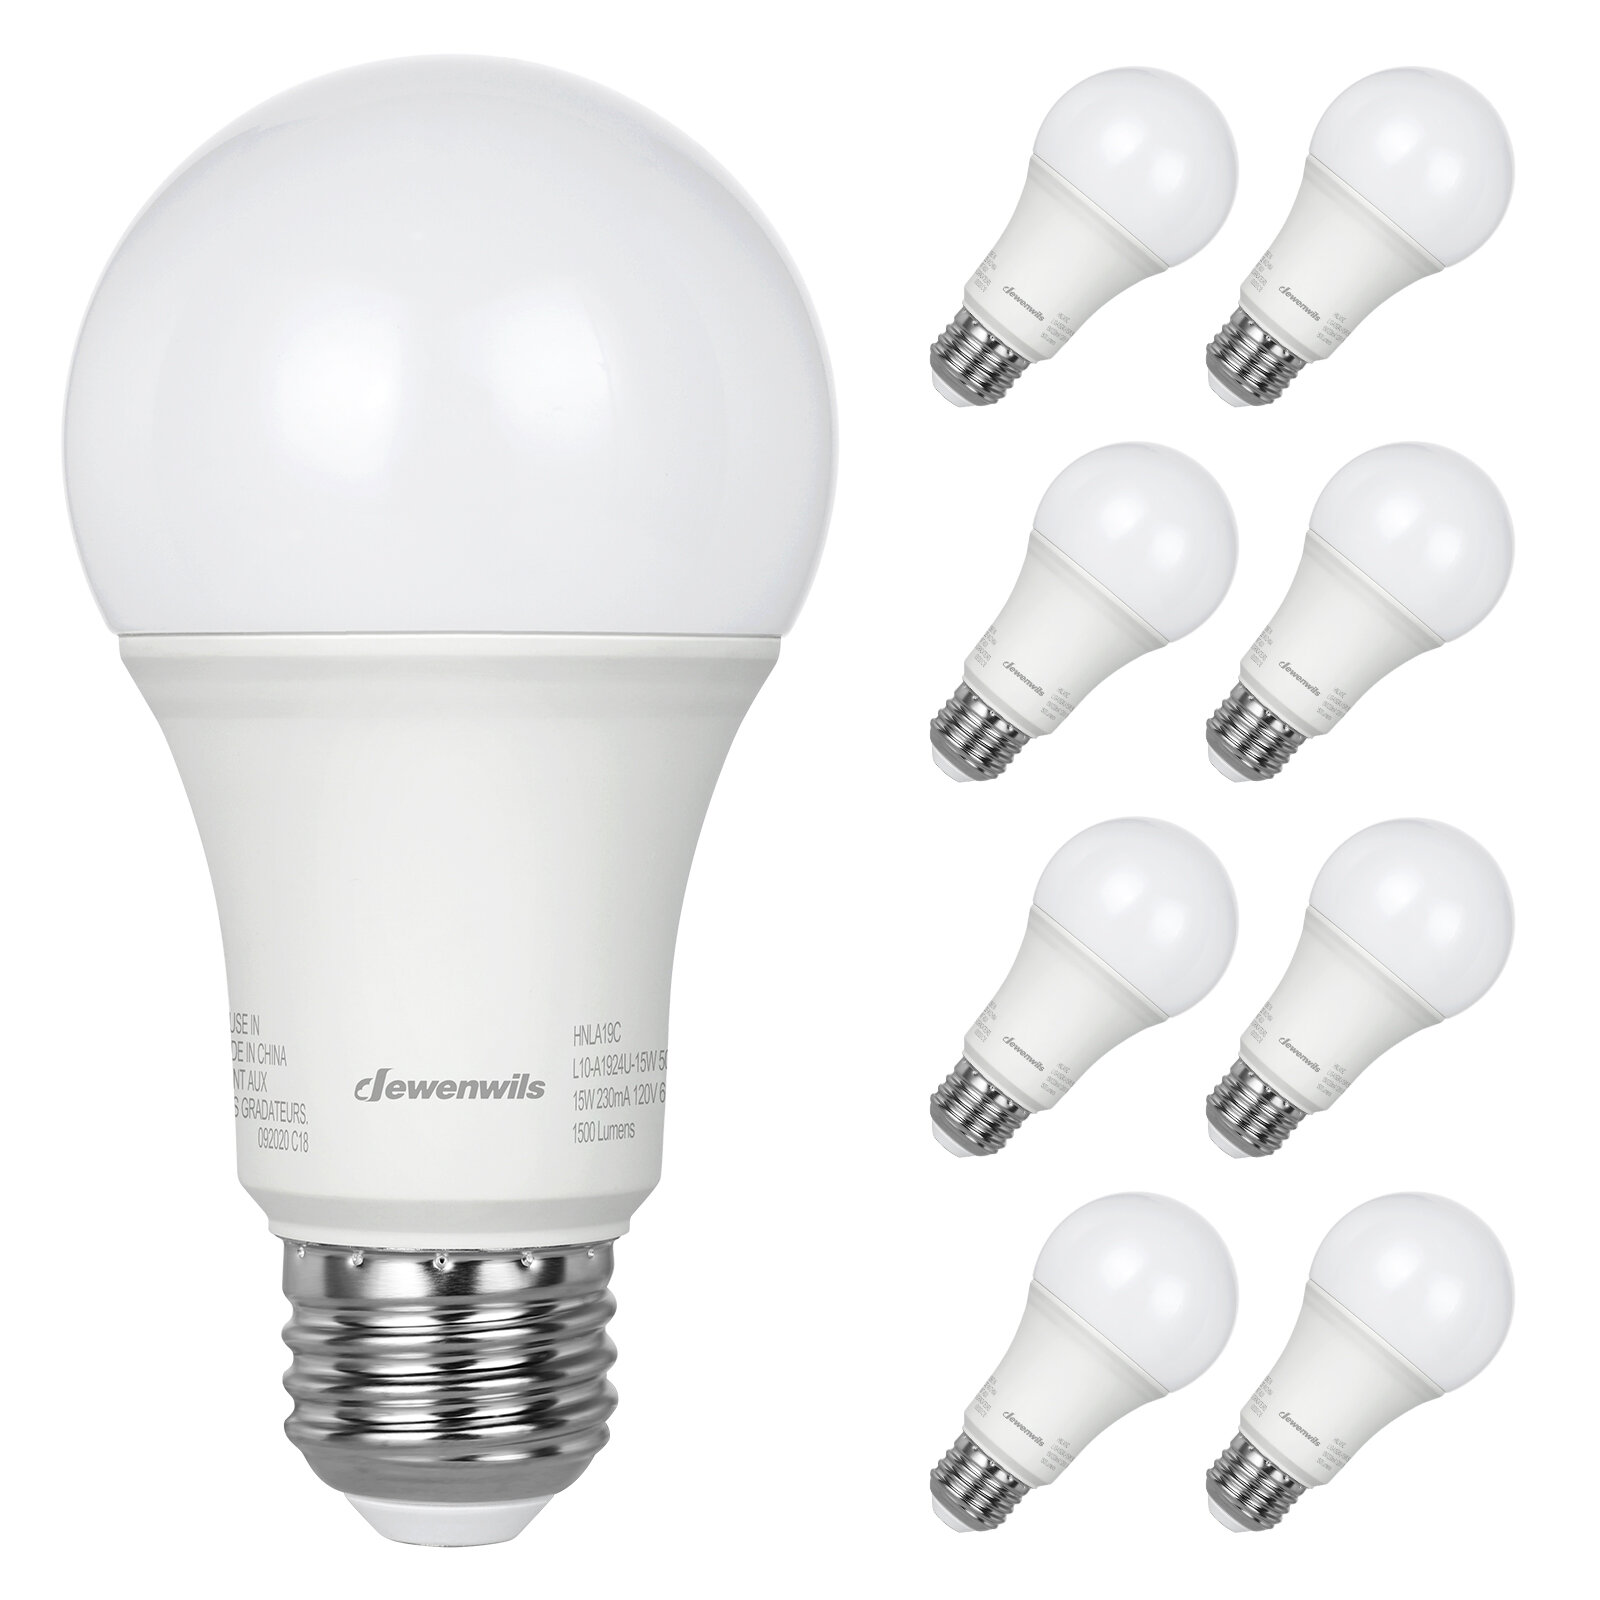 5x Branded LED Energy Saver 15w = 100w 100w E27 Light Bulbs Edison Screw Lamps 